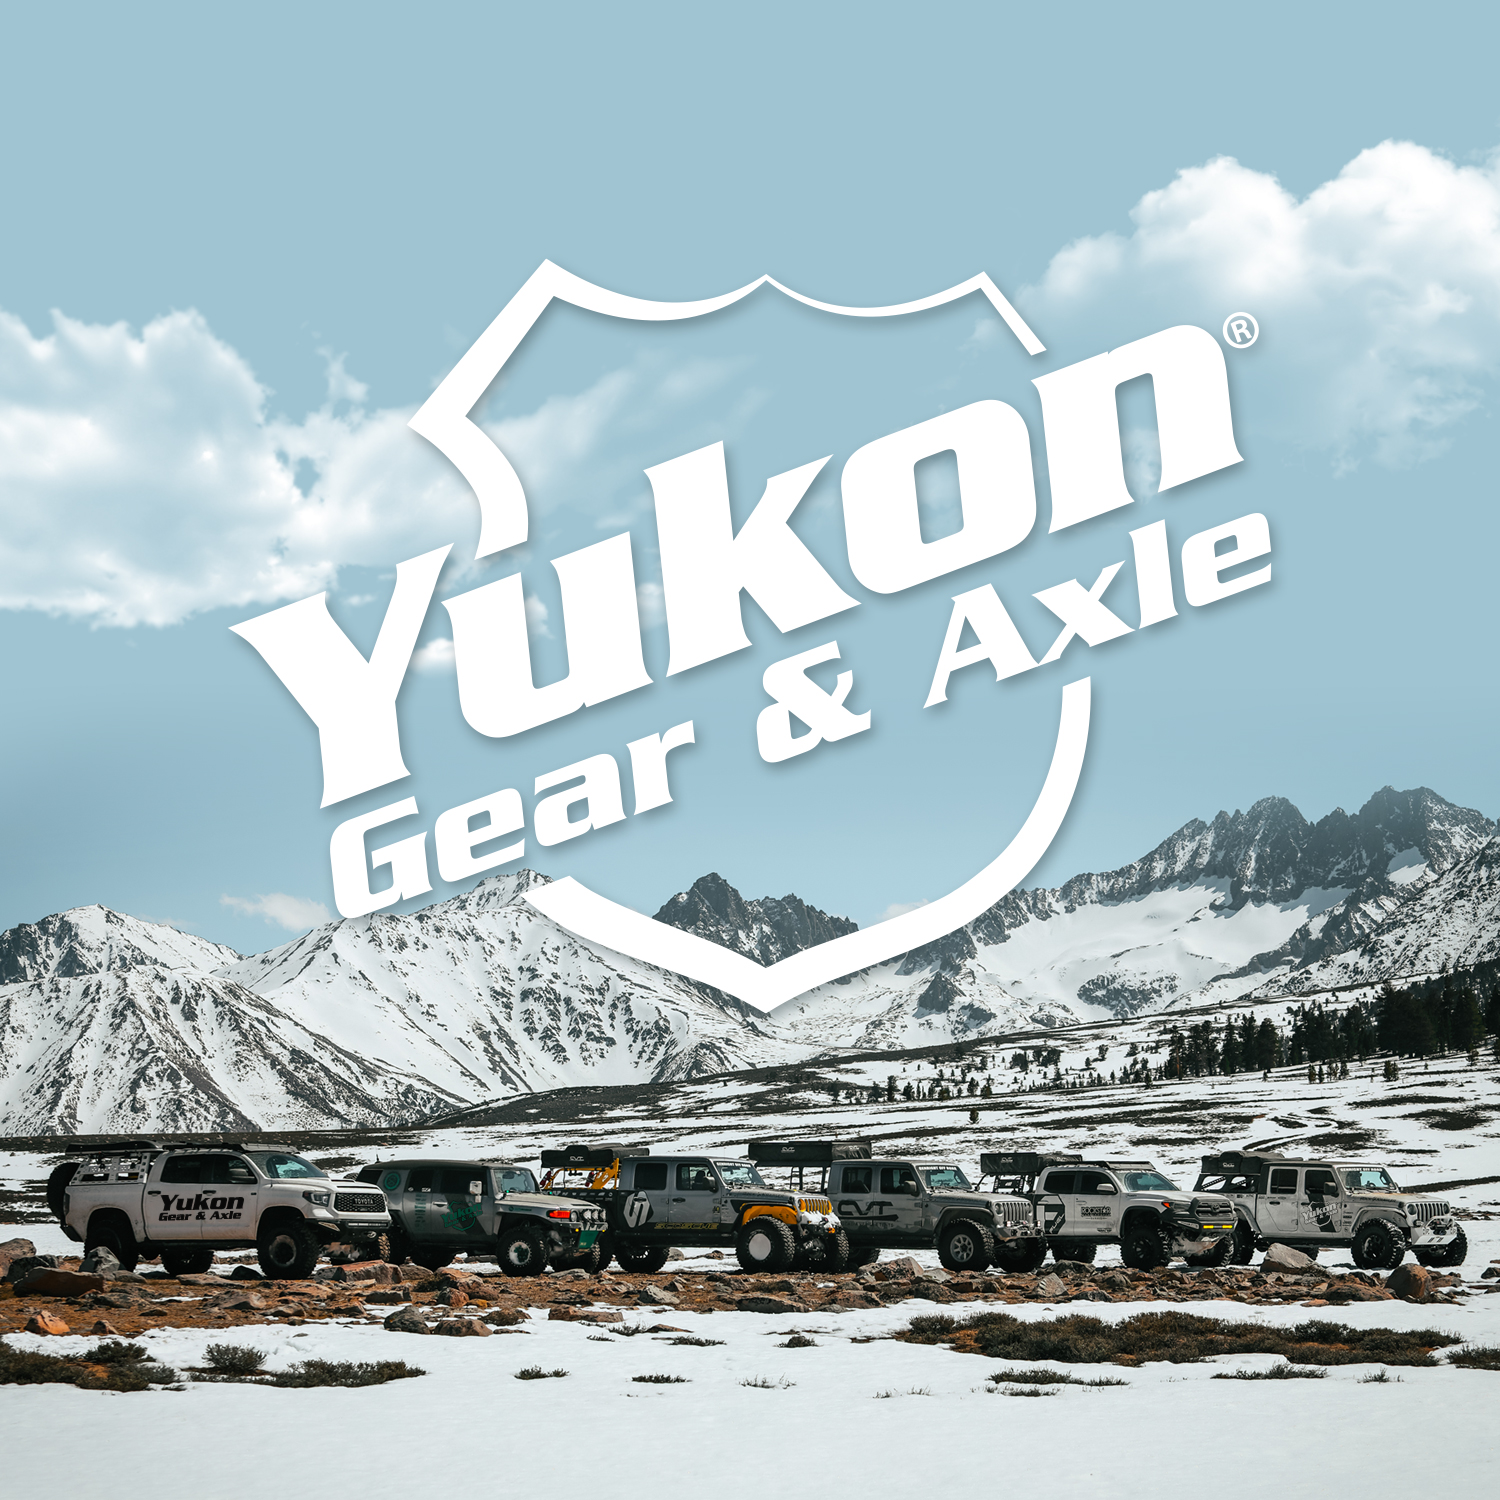 Yukon alloy replacement left hand rear axle for Dana 44 Jeep Rubicon, 30 spline 